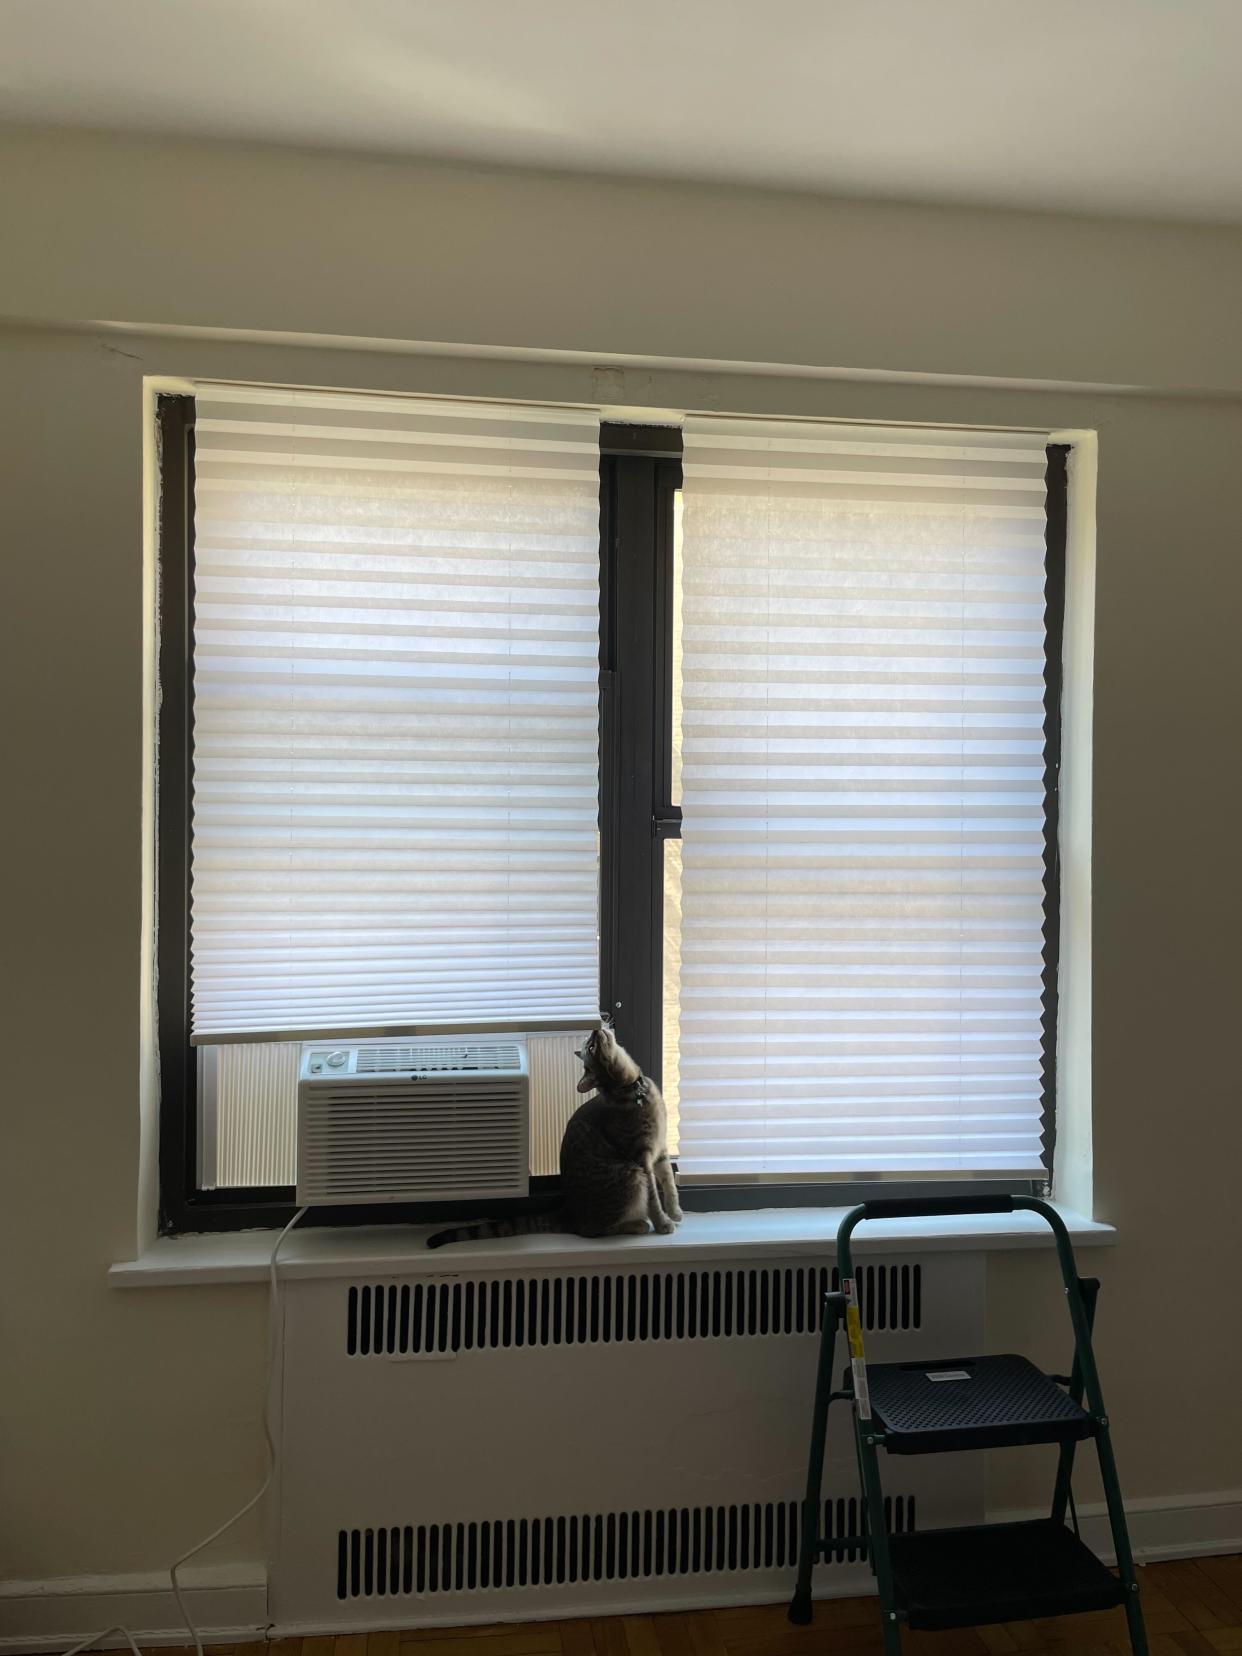 In her new apartment, Zoe Malin abandoned curtain rods and hung up stuck no-nail adhesive shades instead. (Zoe Malin)